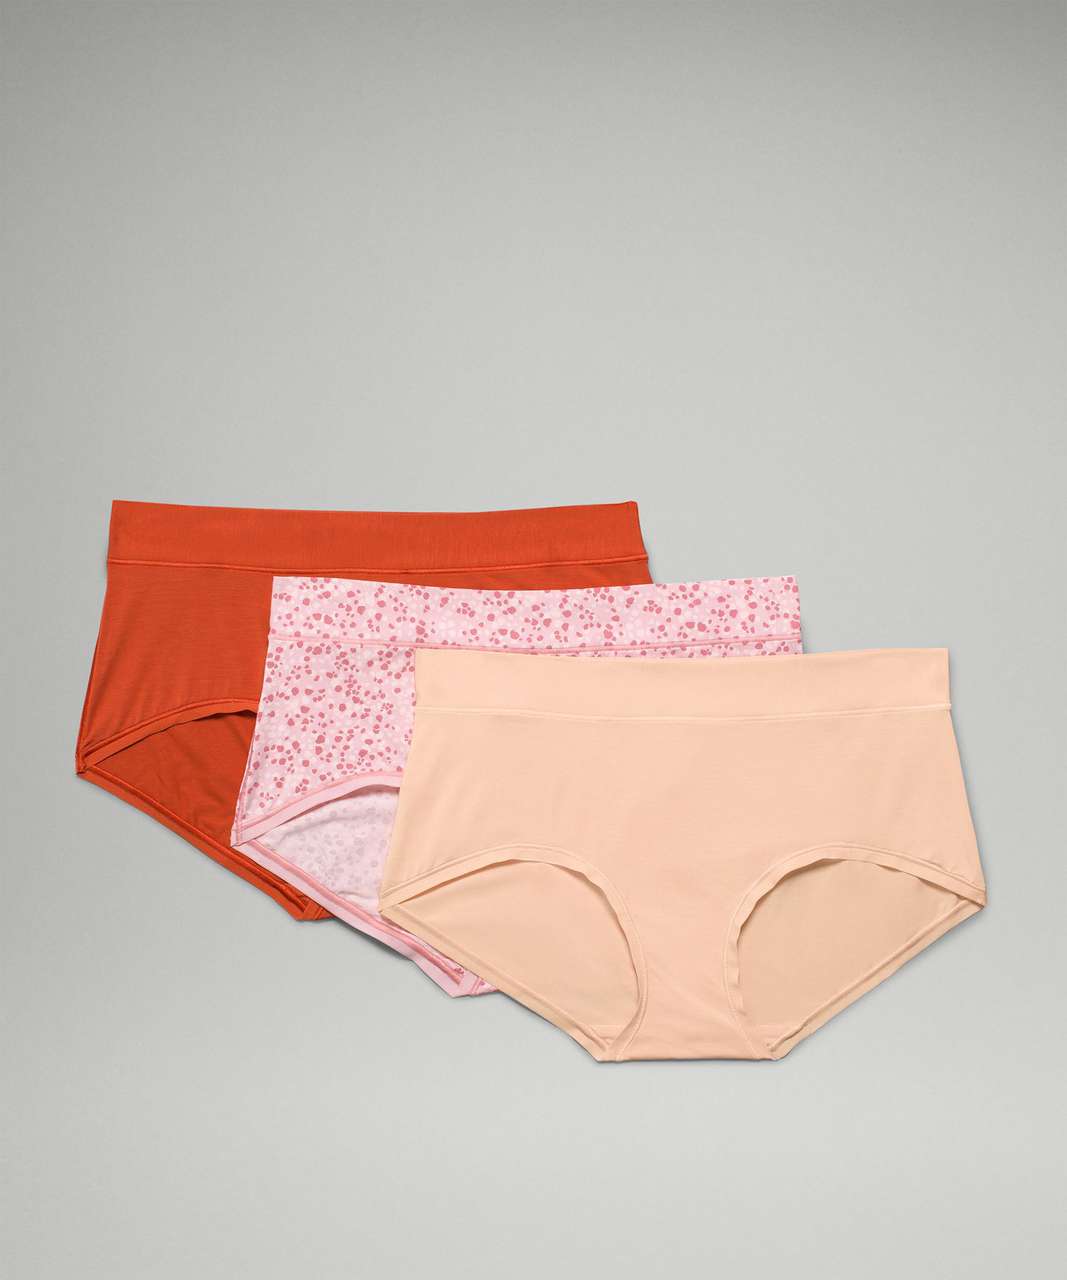 Lululemon UnderEase Mid Rise Boyshort Underwear 3 Pack - Aztec Brick / Bleached Apricot / Scatter Petal Pink Rosebud Pink Mist Brier Rose